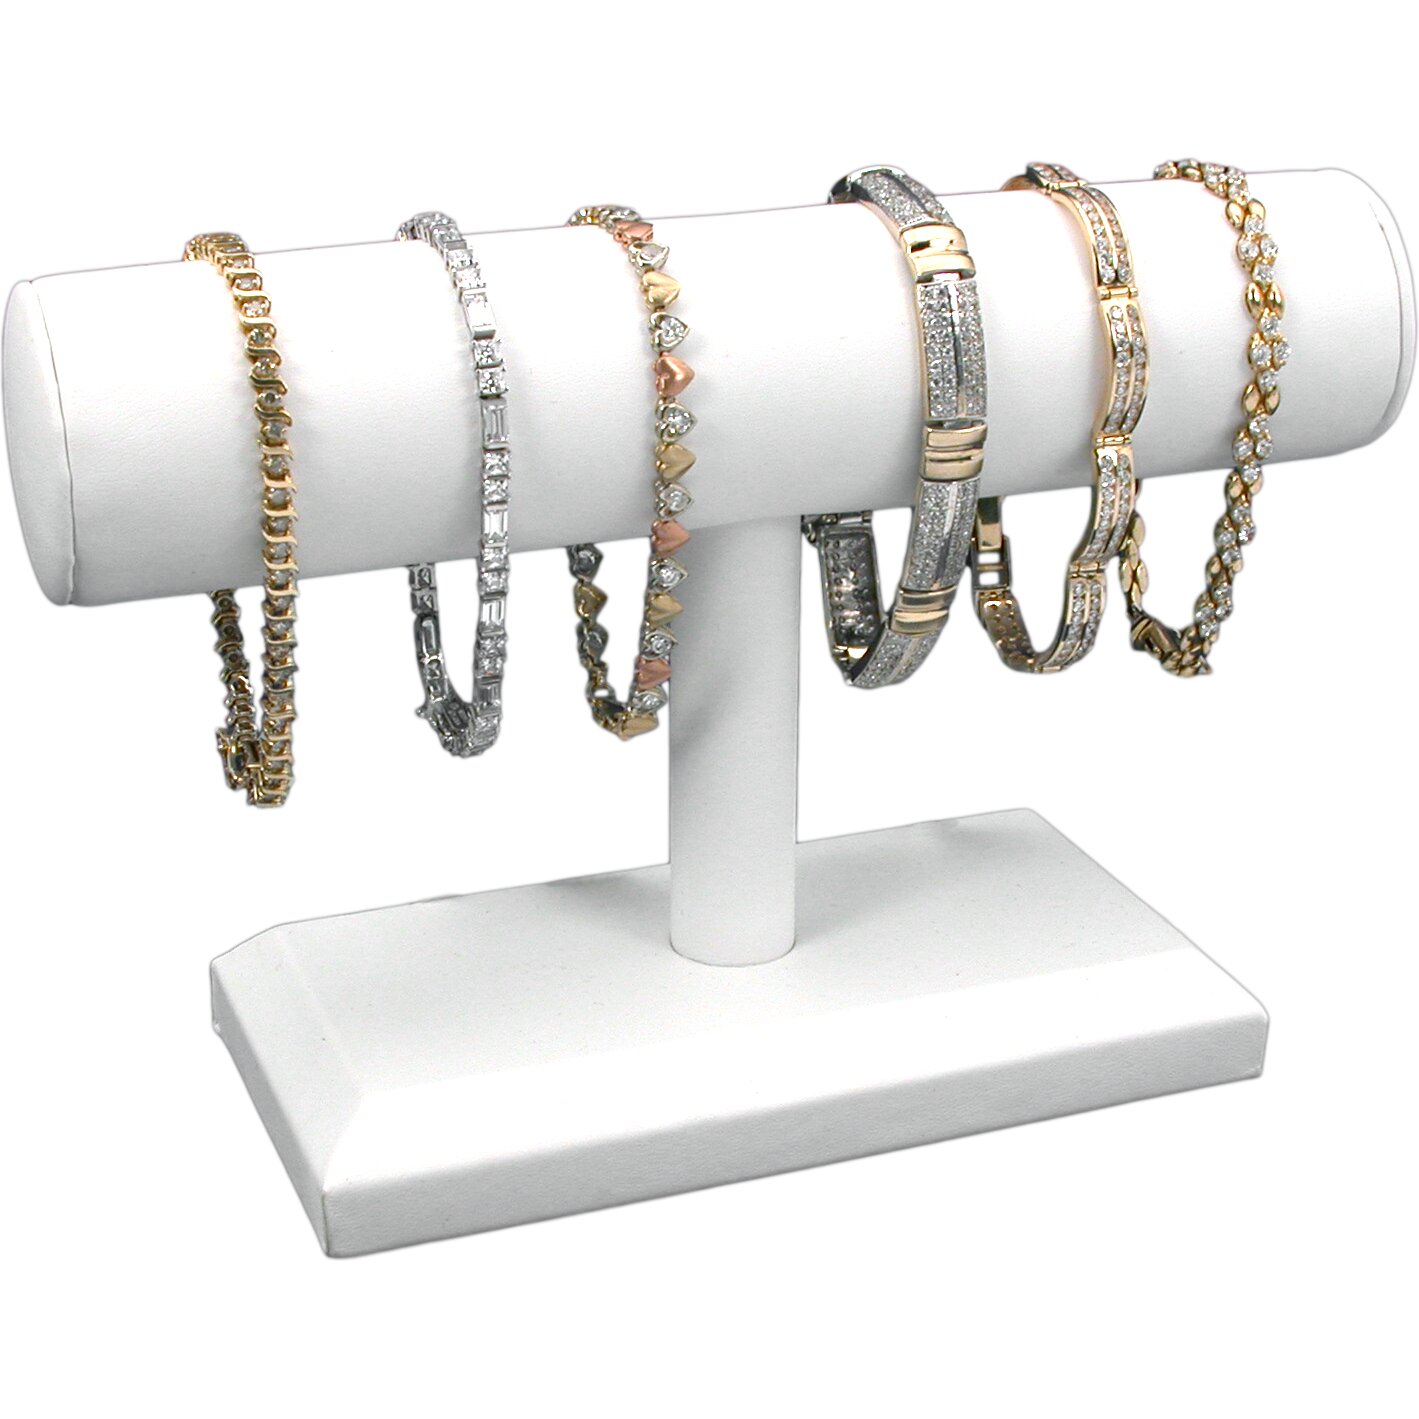 White Leather T-Bar Bracelet Necklace Watch Jewelry Display